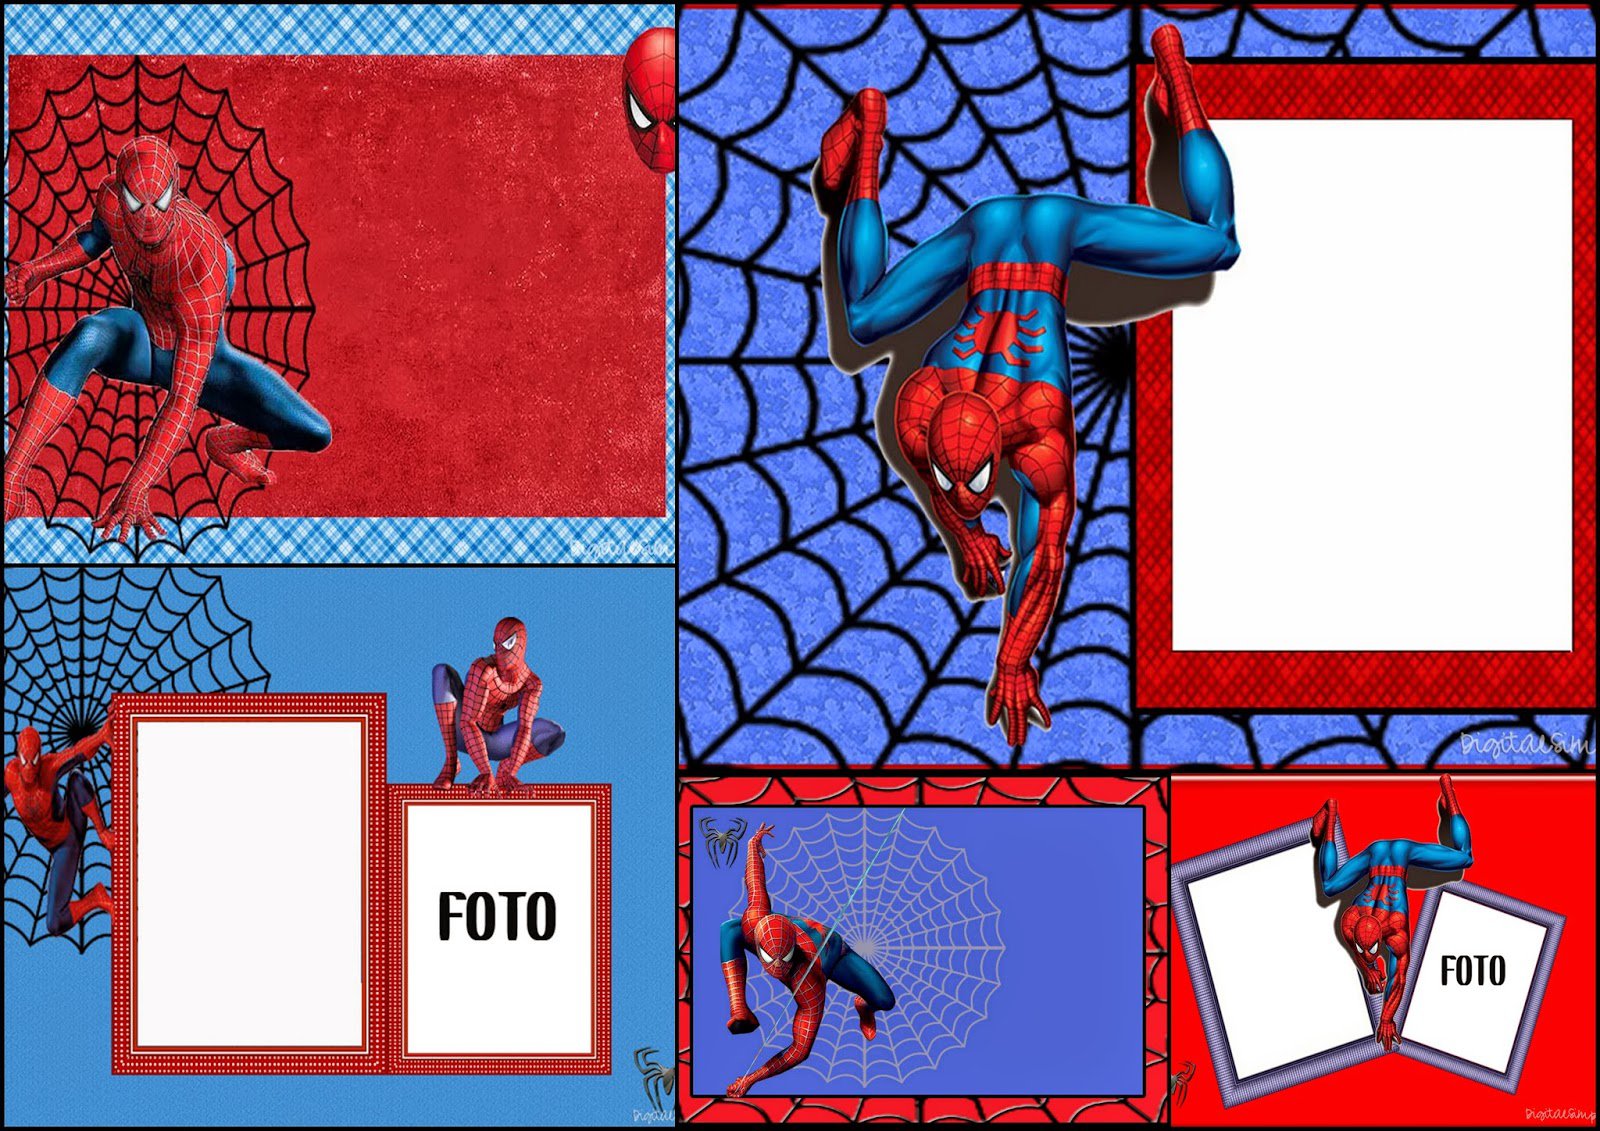 Spiderman Party Invitations Printable